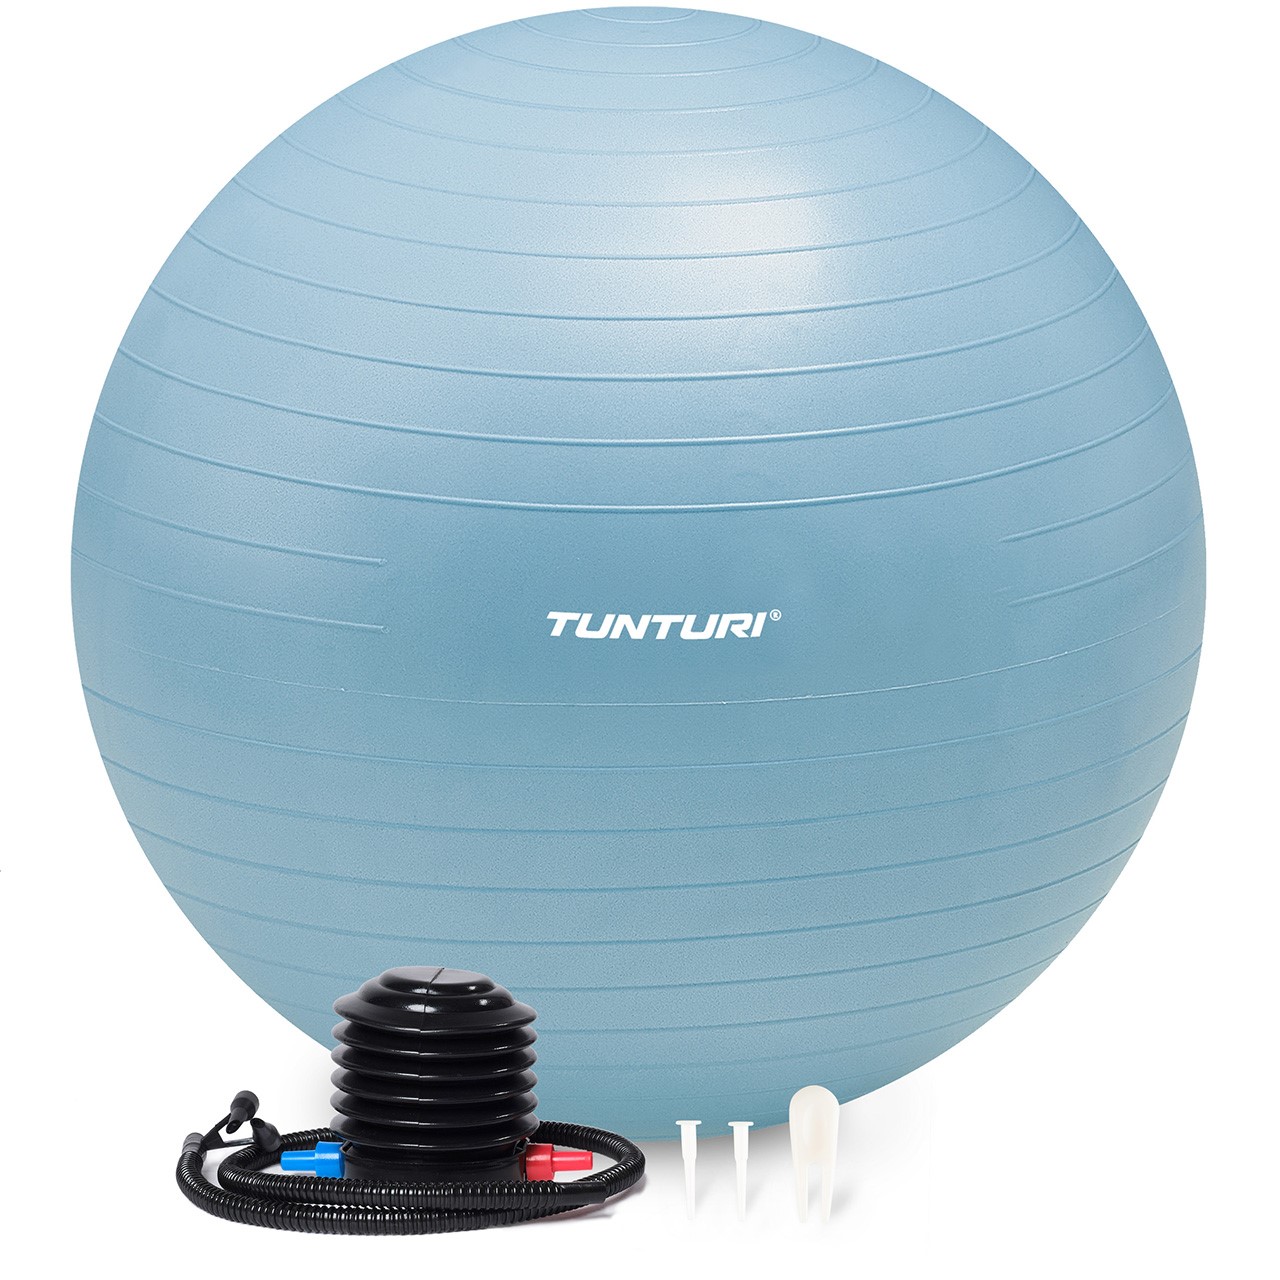 Tunturi Gym Ball - Anti Burst ABS 65 cm light blue